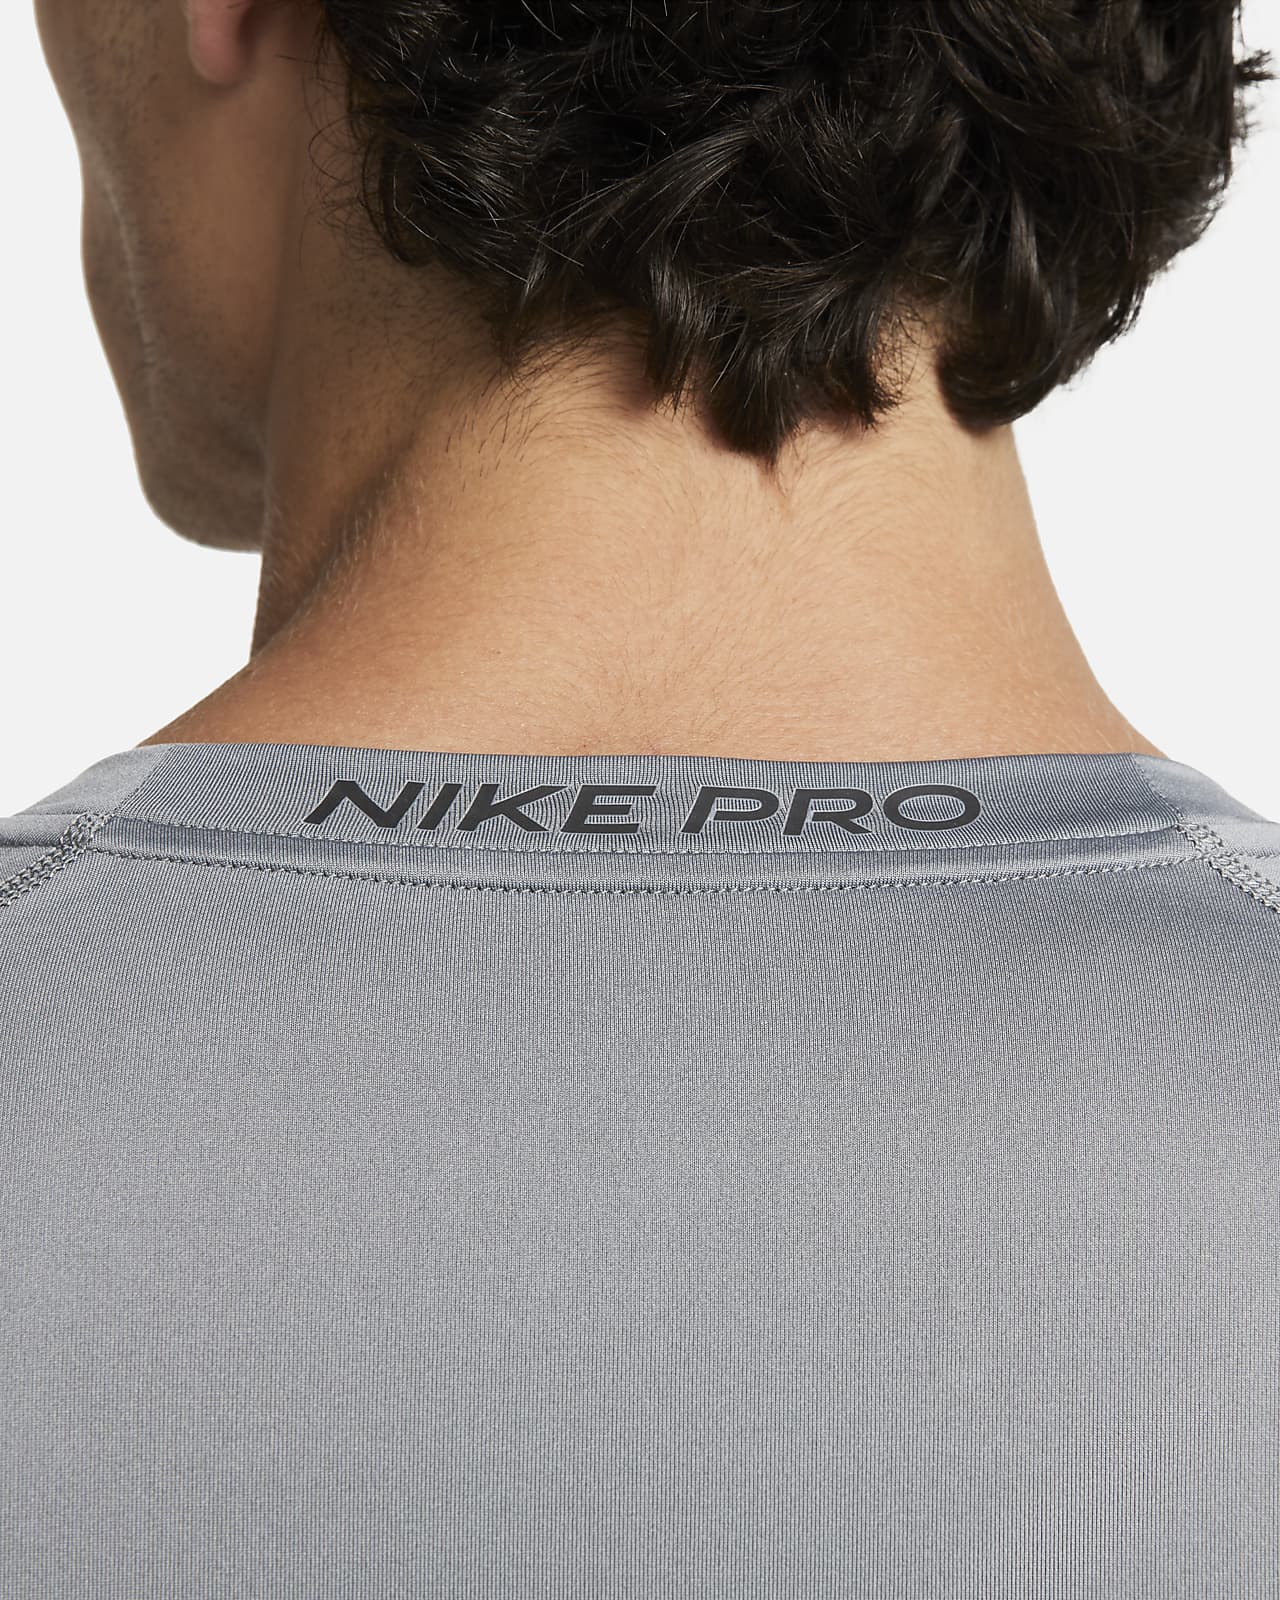 Nike Pro Dri-FIT Men's Tight-Fit Long-Sleeve Top. Nike SI